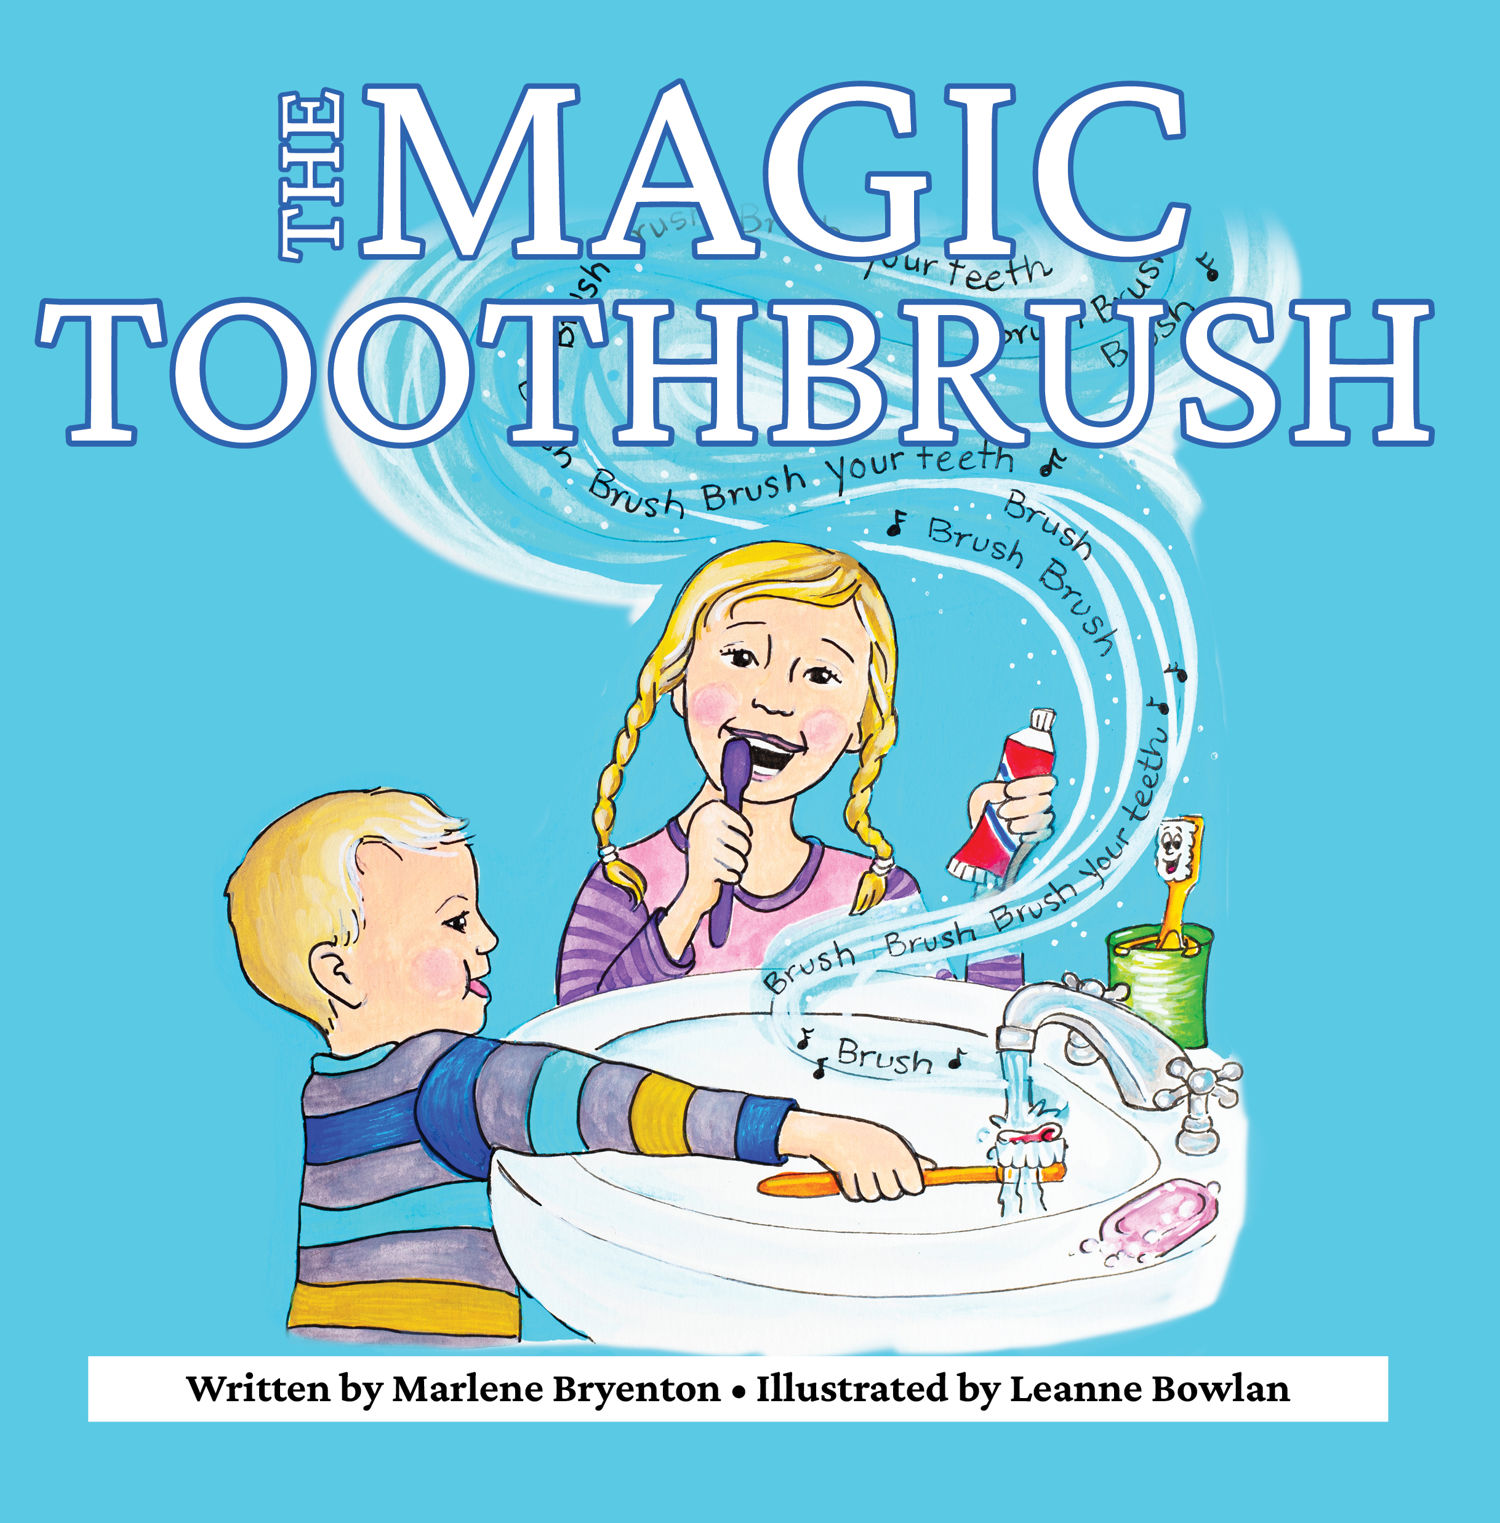 The Magic Toothbrush